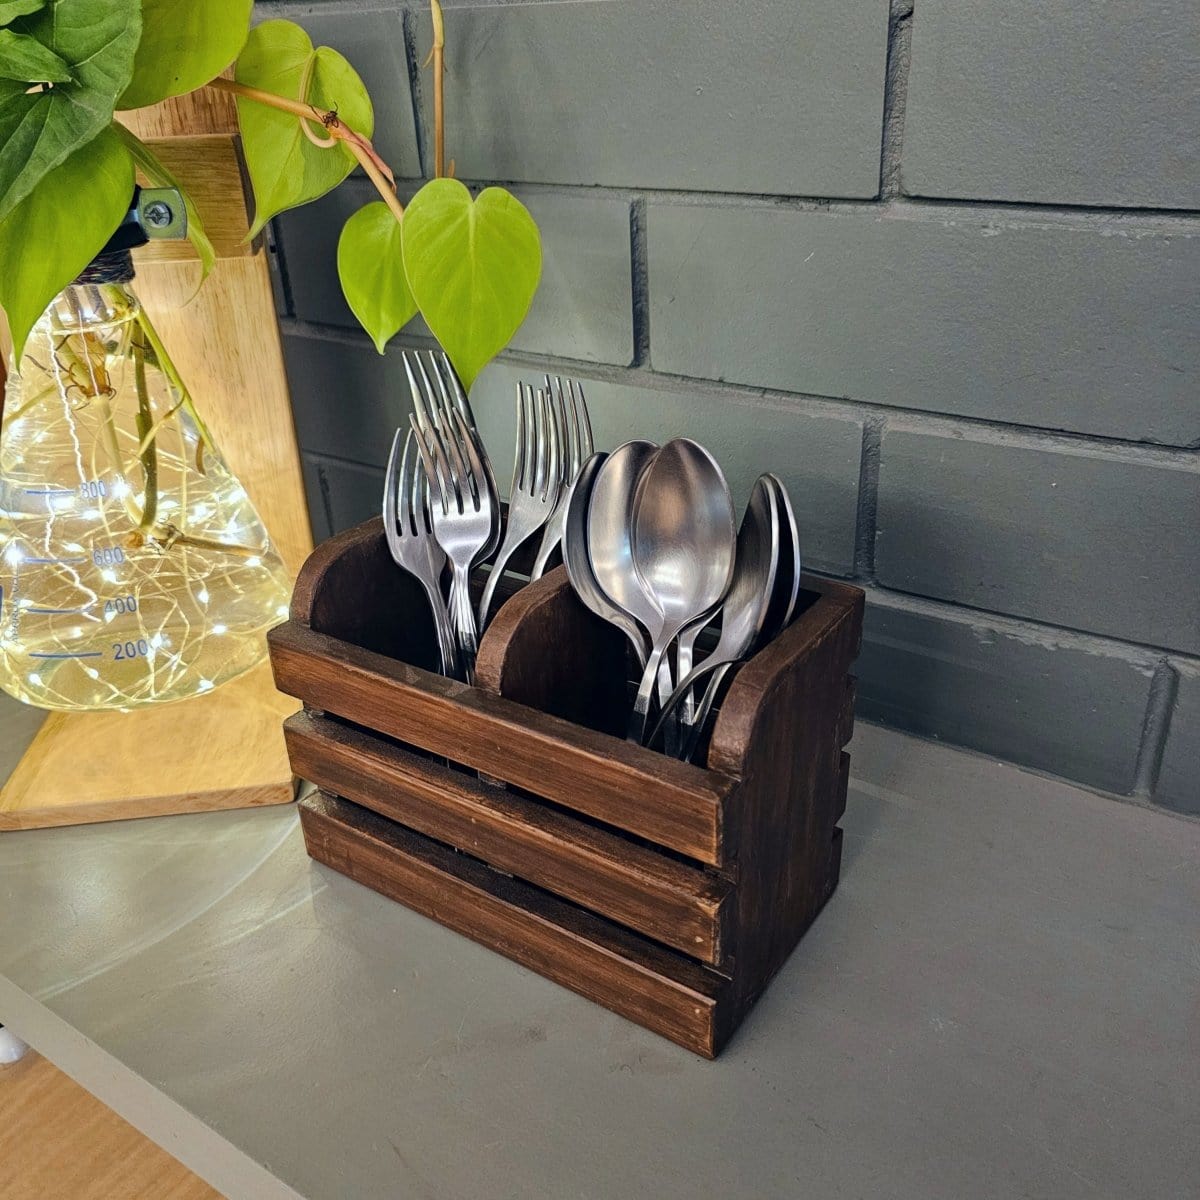 Barish Cutlery Holder Small Walnut BH0166WT Best Home Decor Handcrafted